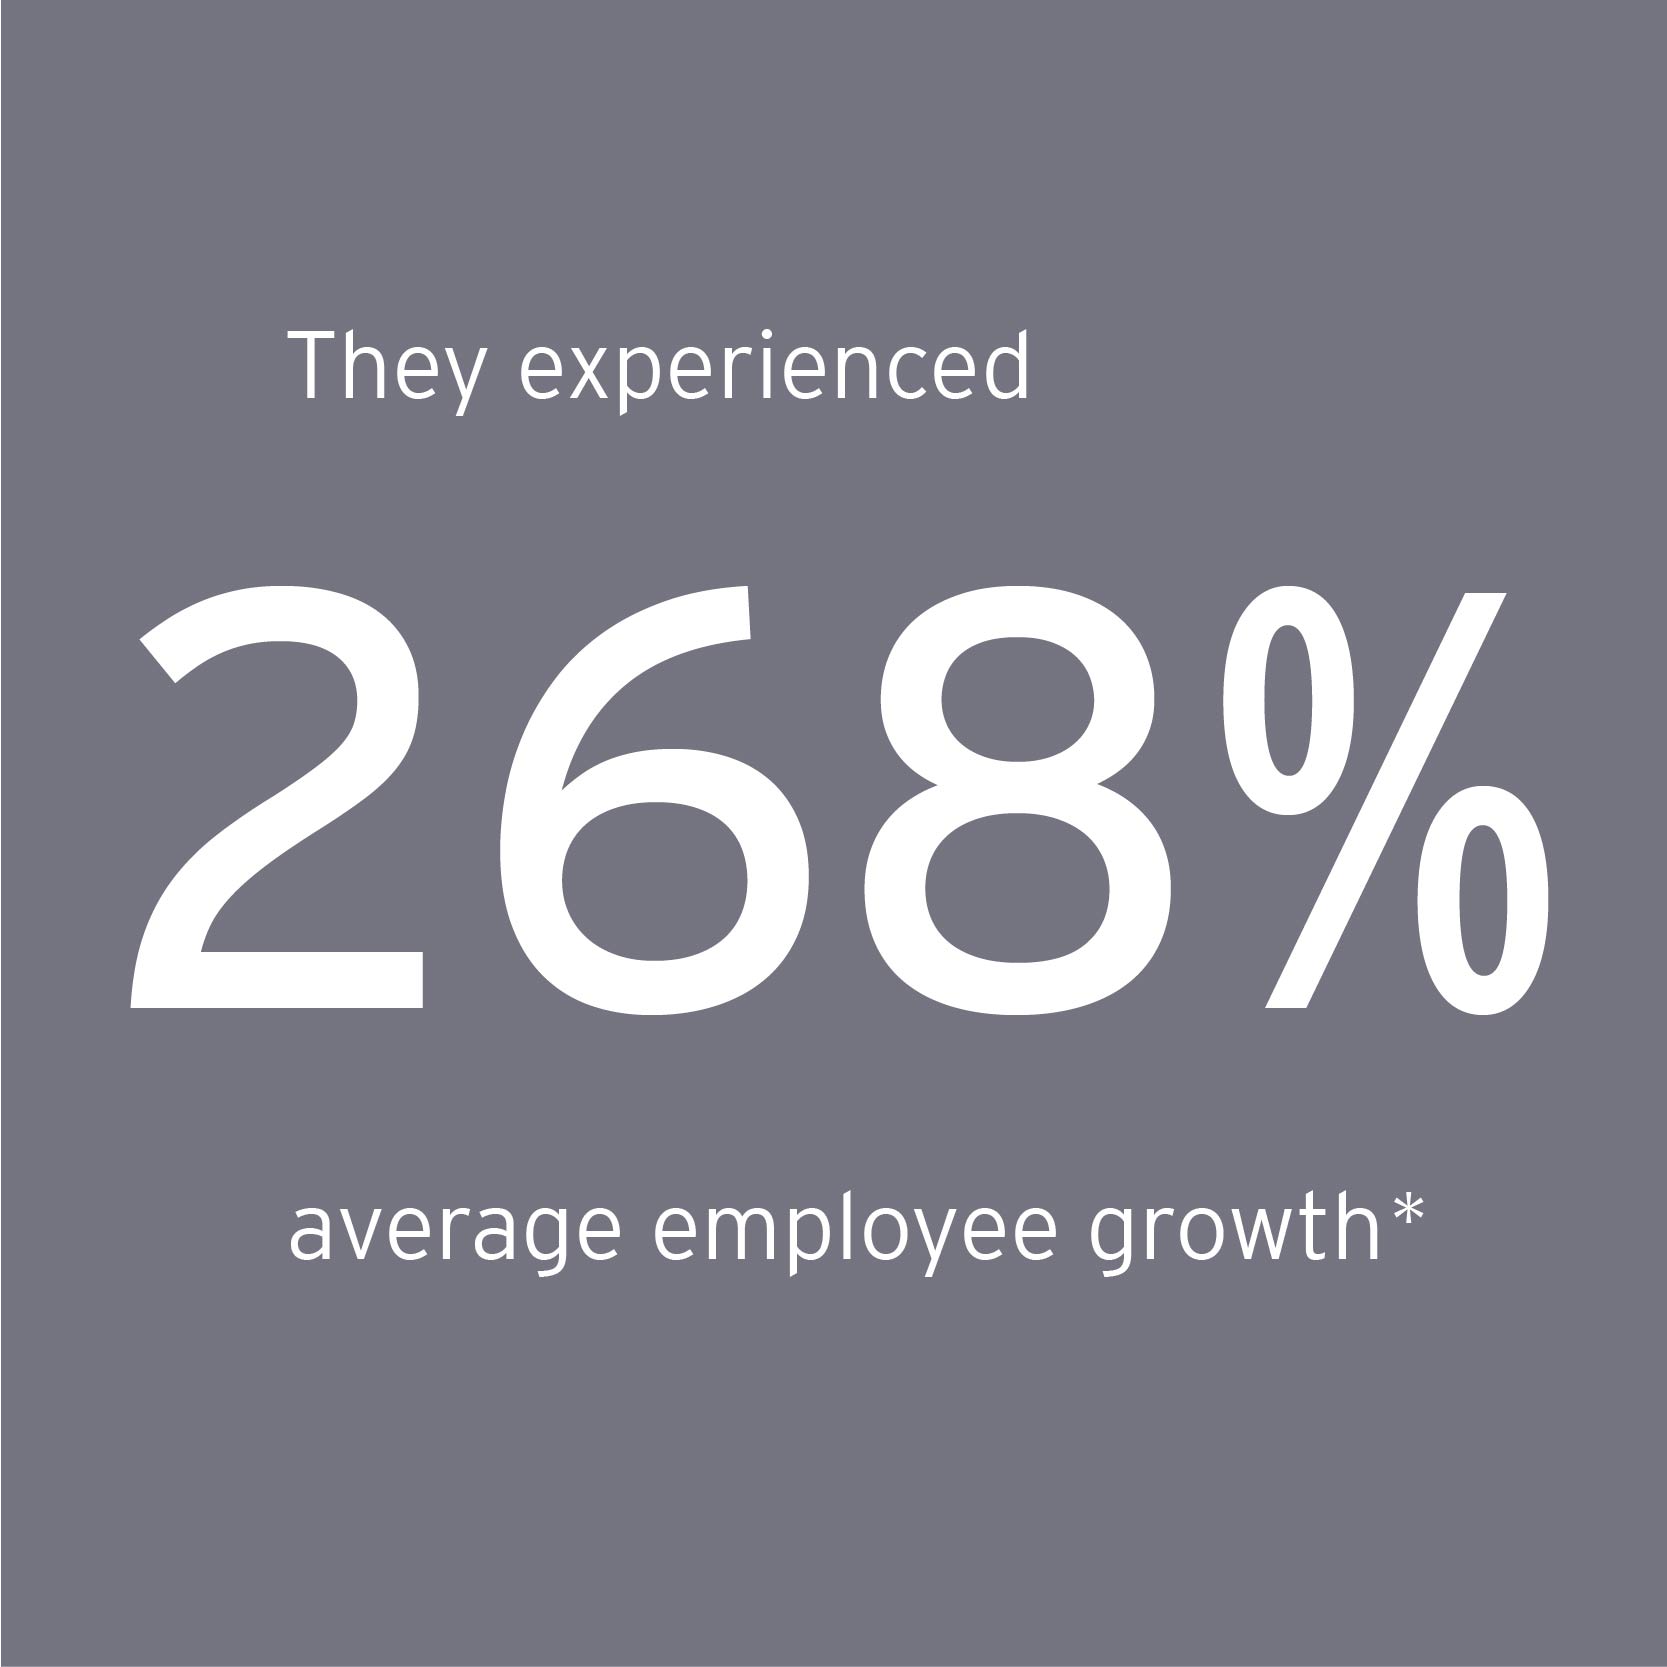 EOY Mid-Atlantic finalists experienced 268% average employee growth